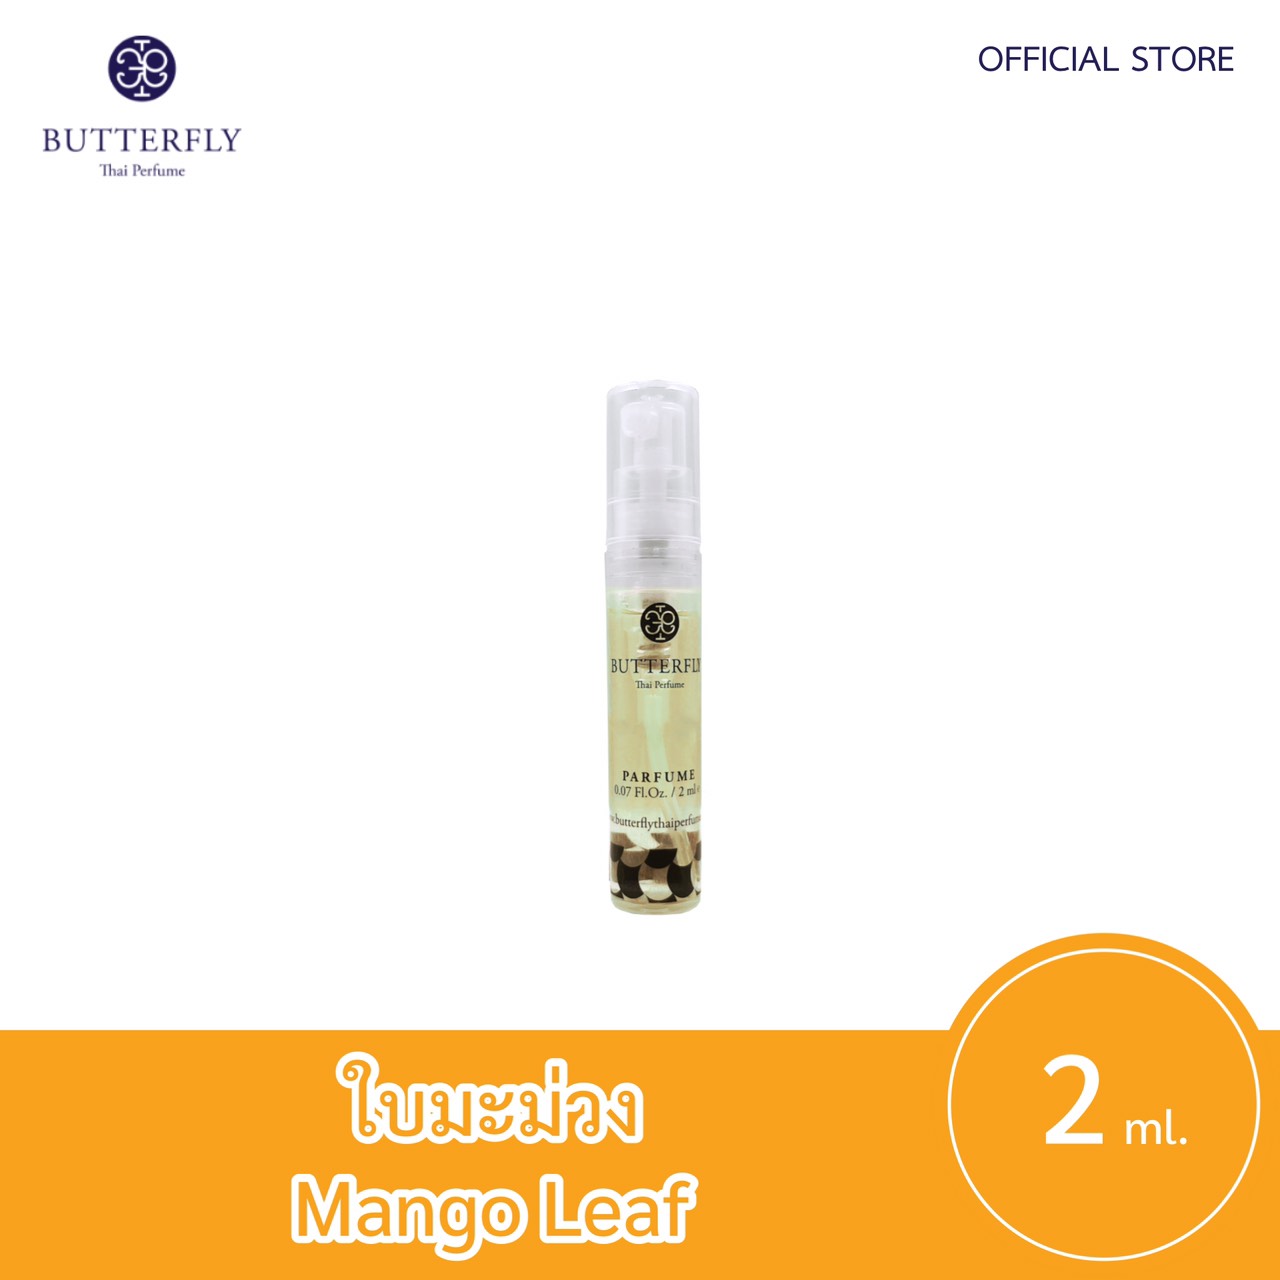 Butterfly Thai Perfume - น้ำหอมบัตเตอร์ฟลาย ไทย เพอร์ฟูม  ขนาดทดลอง 2ml.  กลิ่น ใบมะม่วงปริมาณ (มล.) 2